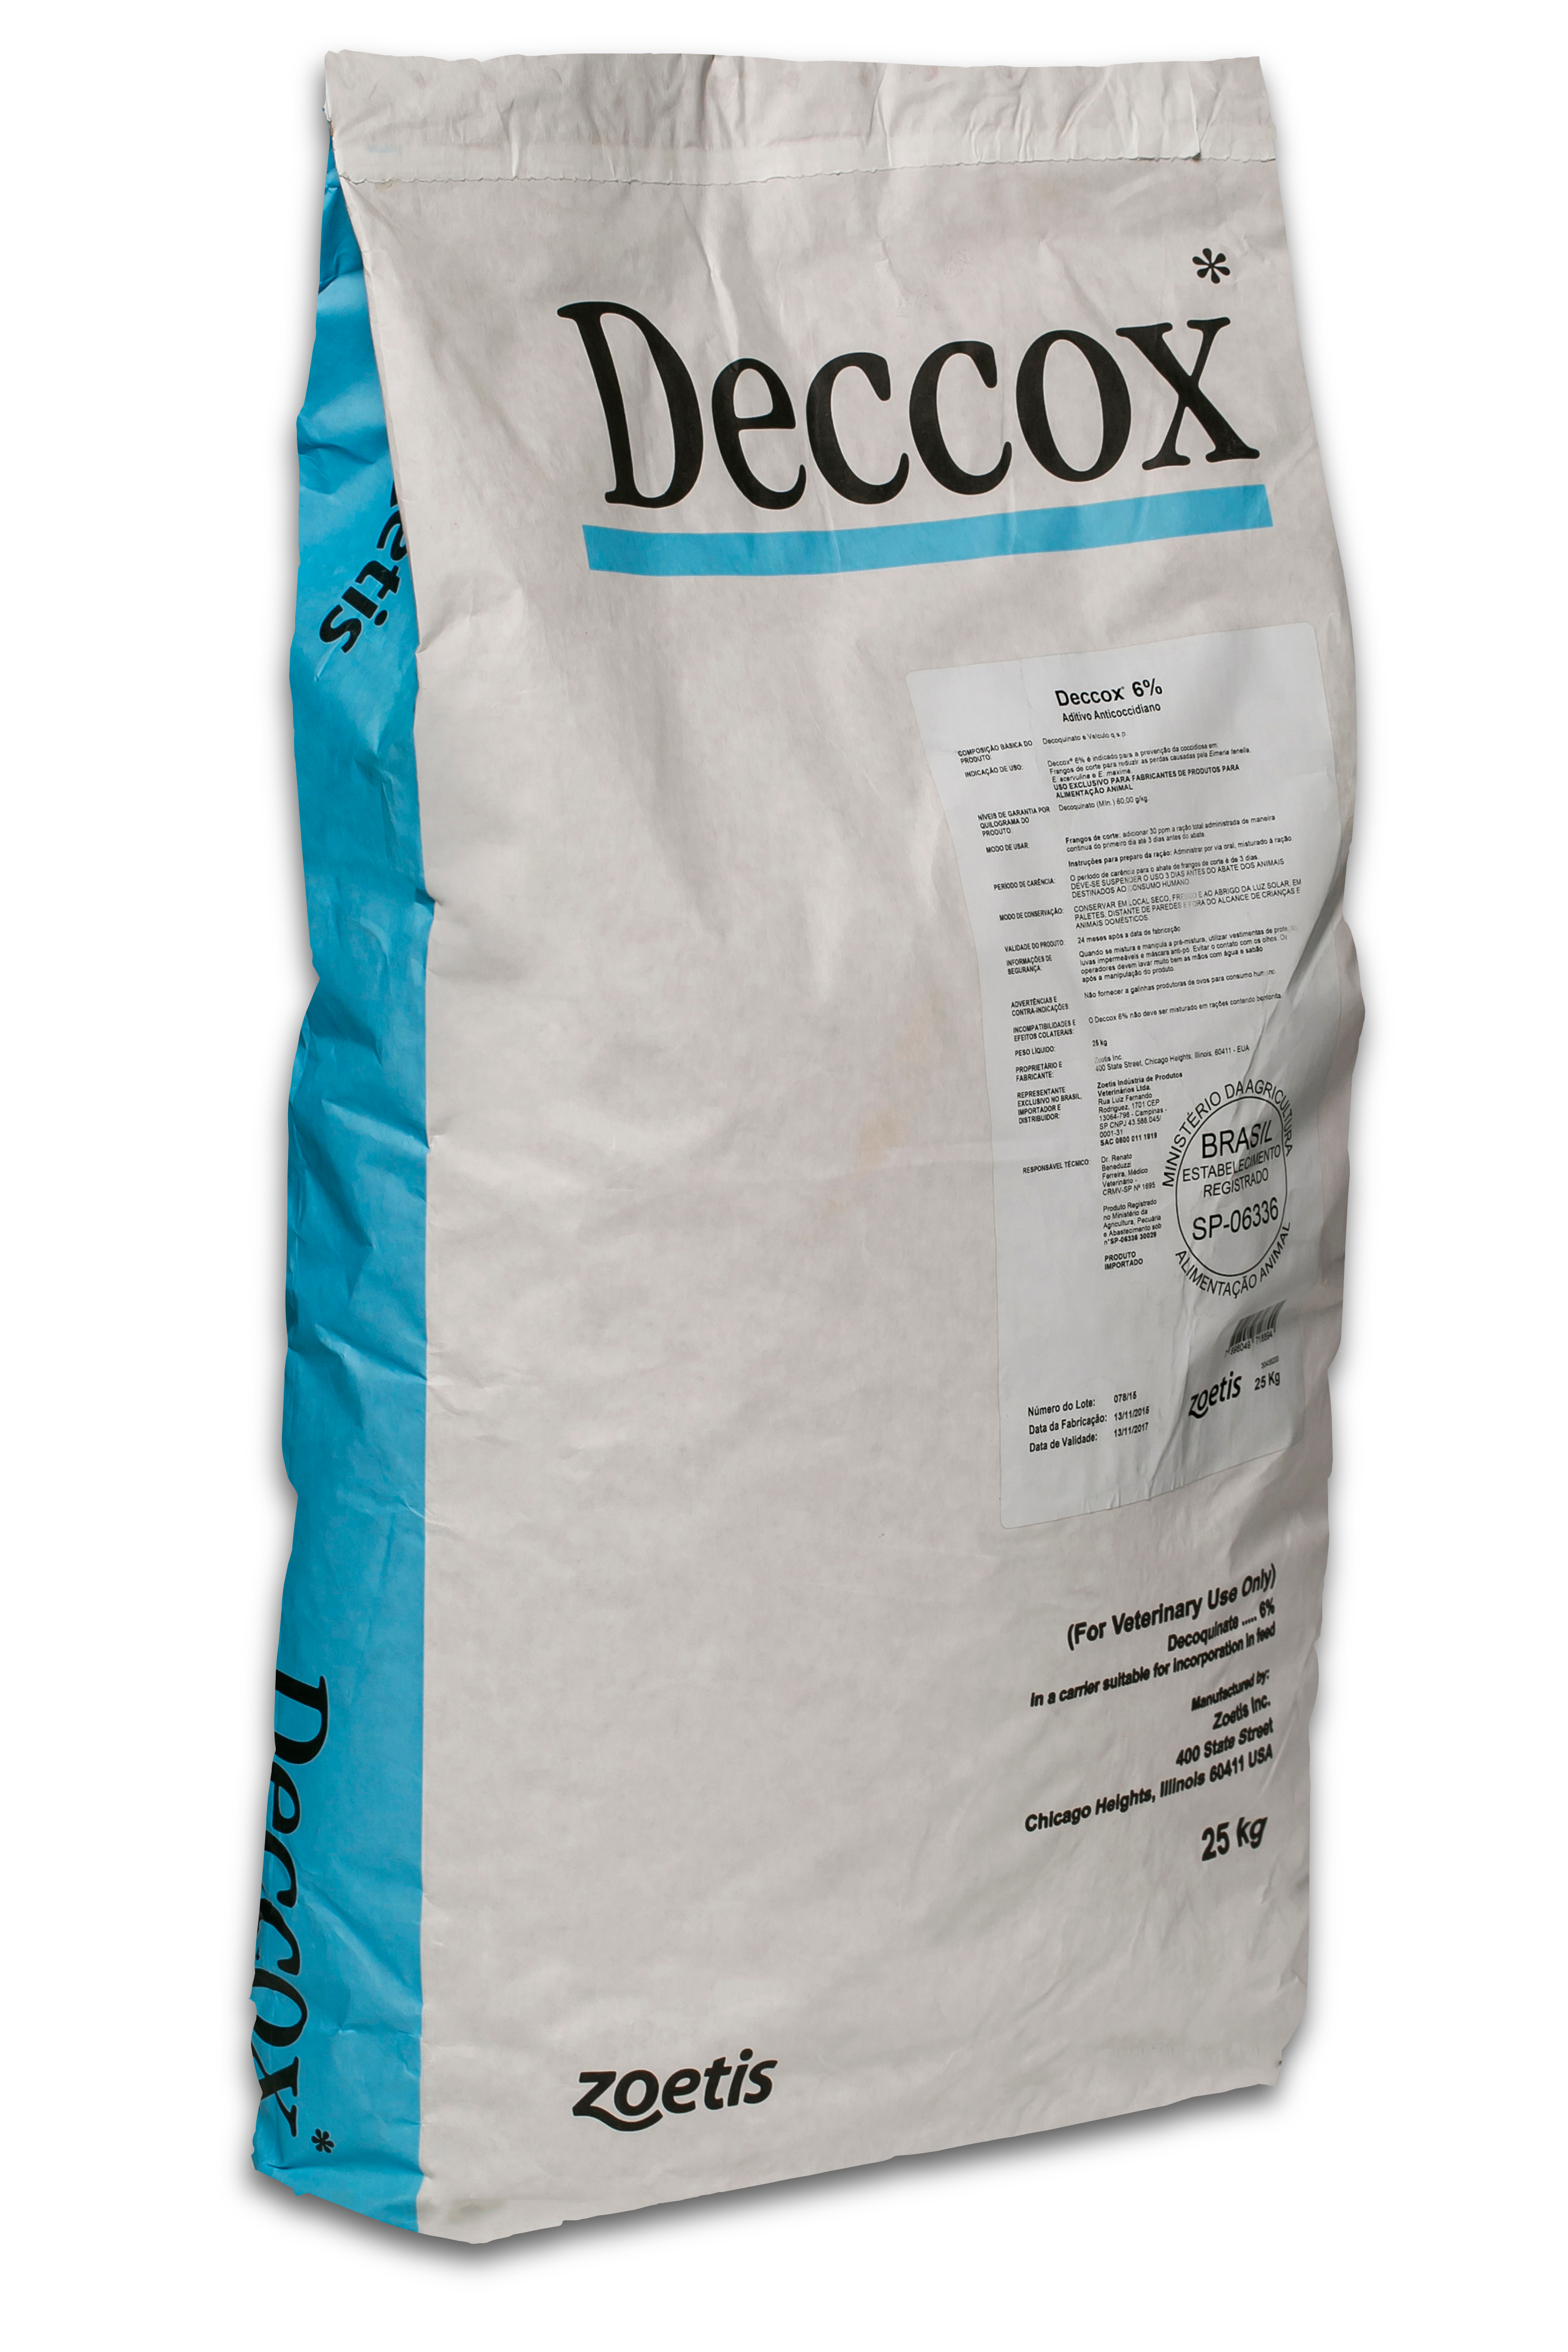 Deccox® 6%